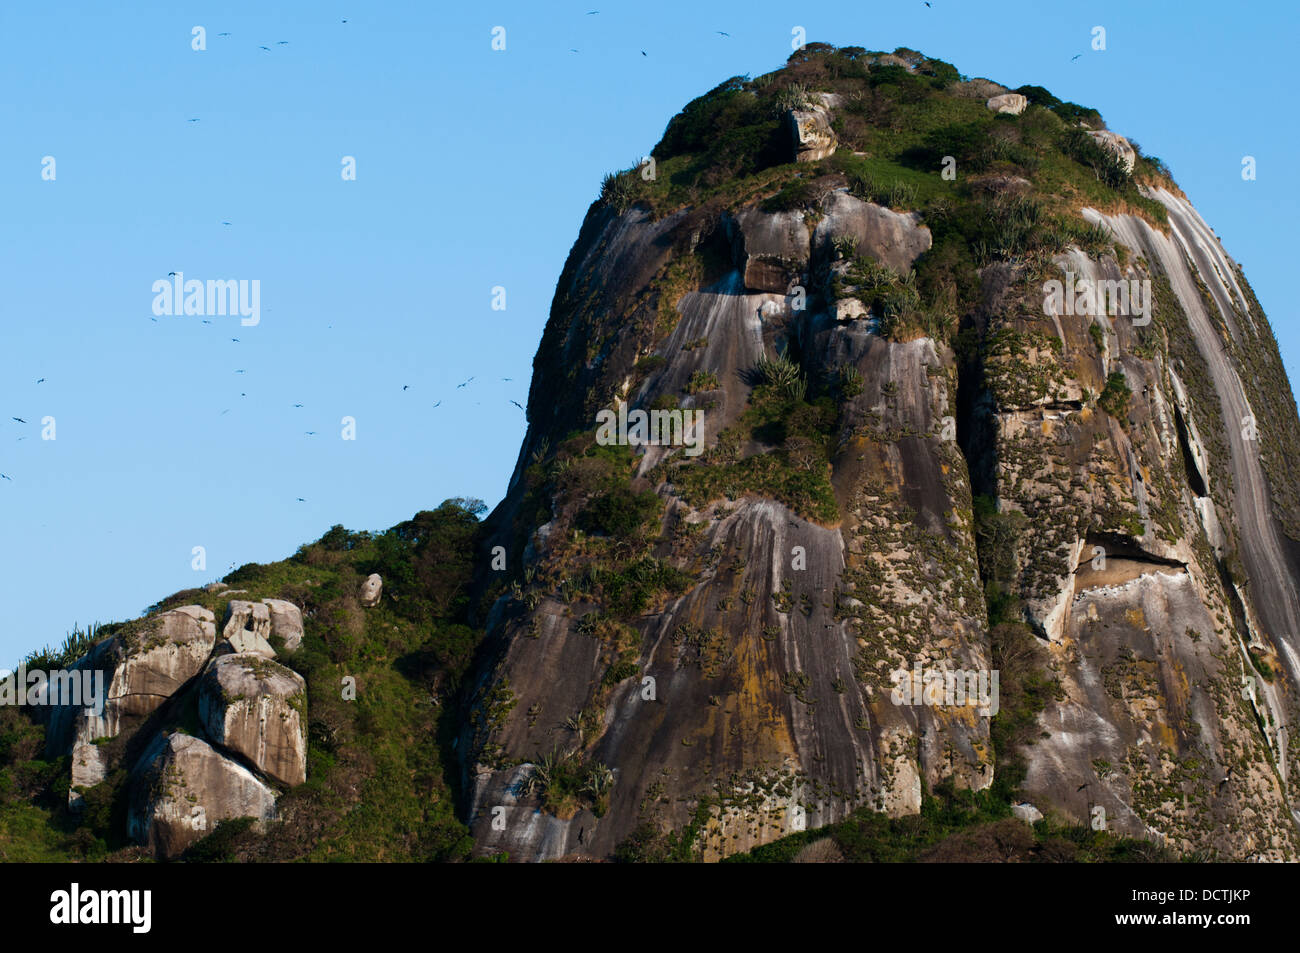 Alcatrazes islands, shore of Sao Paulo state, Brazil. Stock Photo